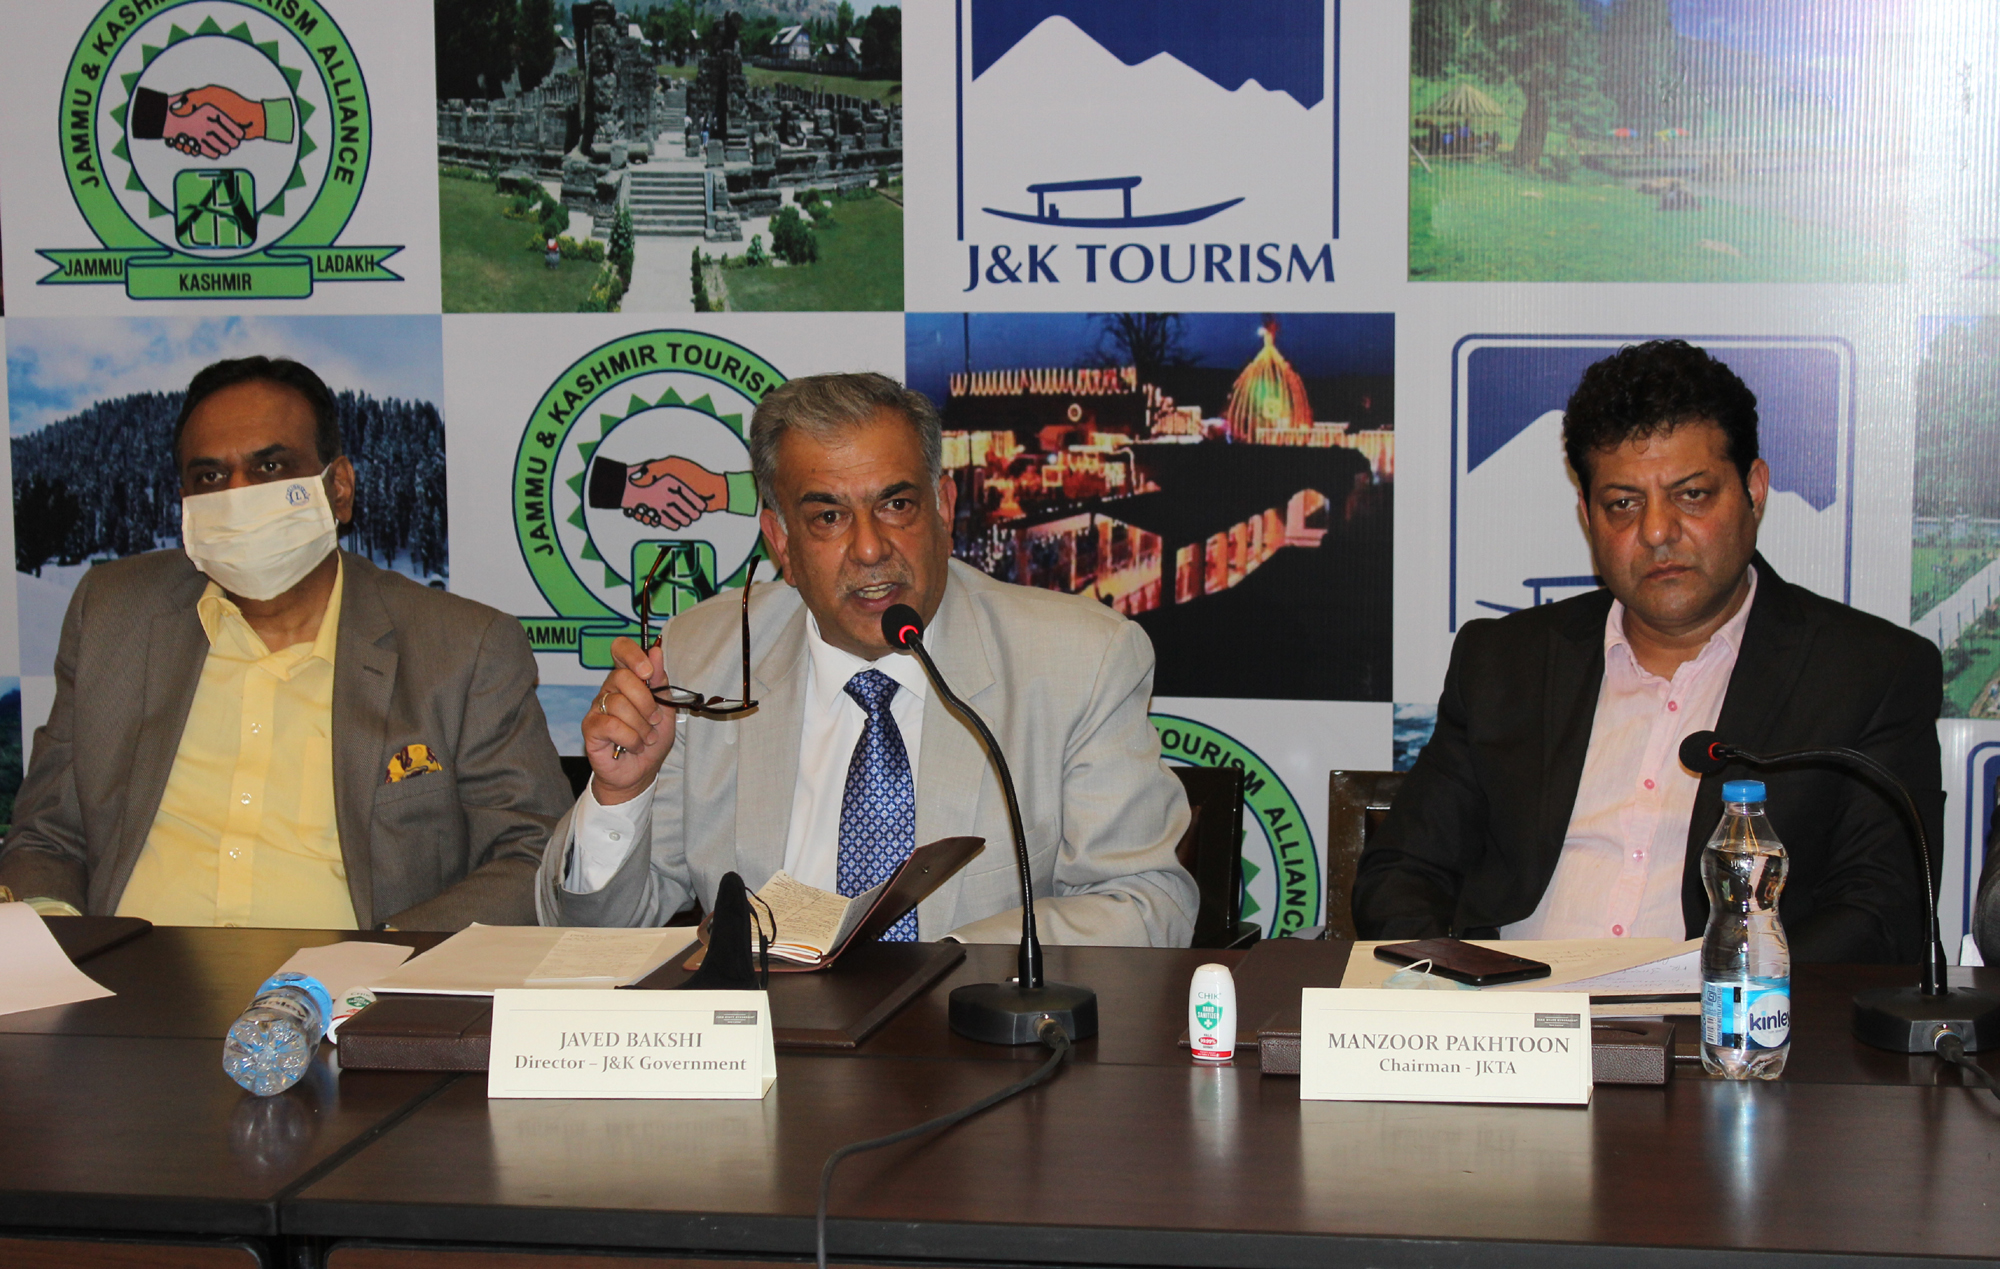 Roadshow held to promote Jammu & Kashmir tourism